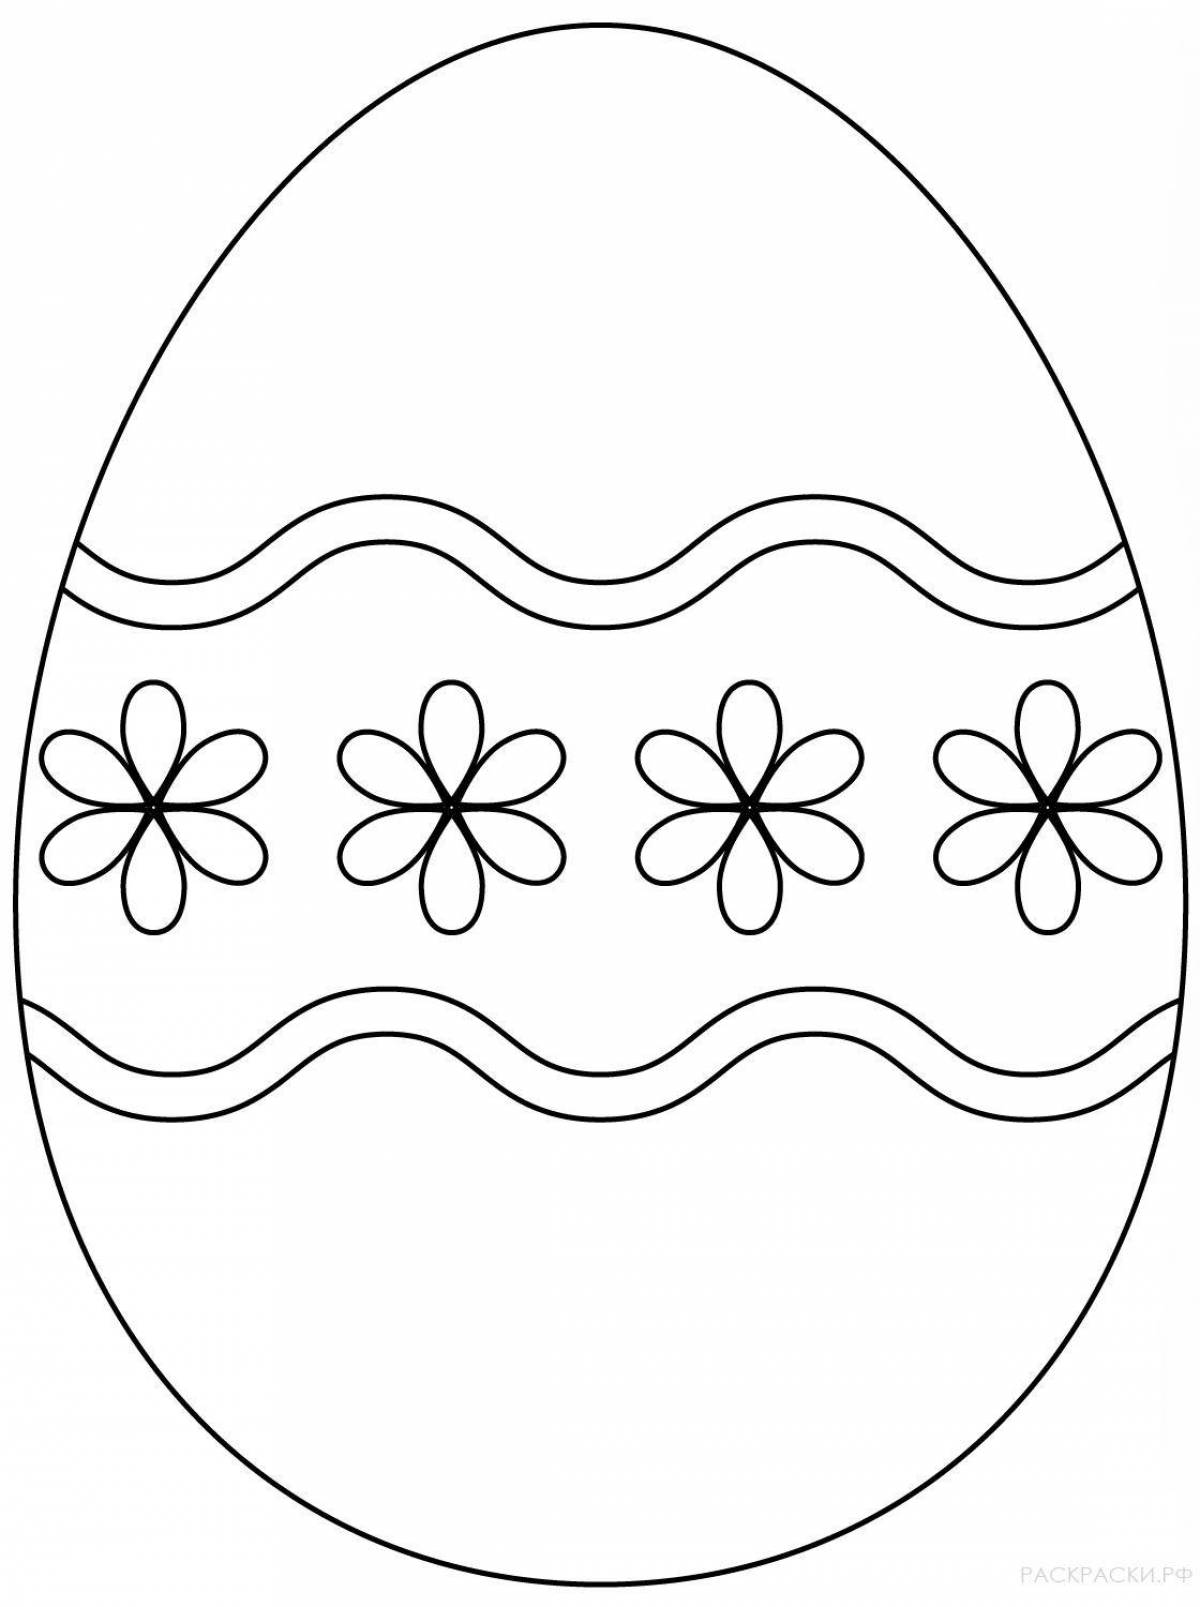 Яркая раскраска яйца для детей